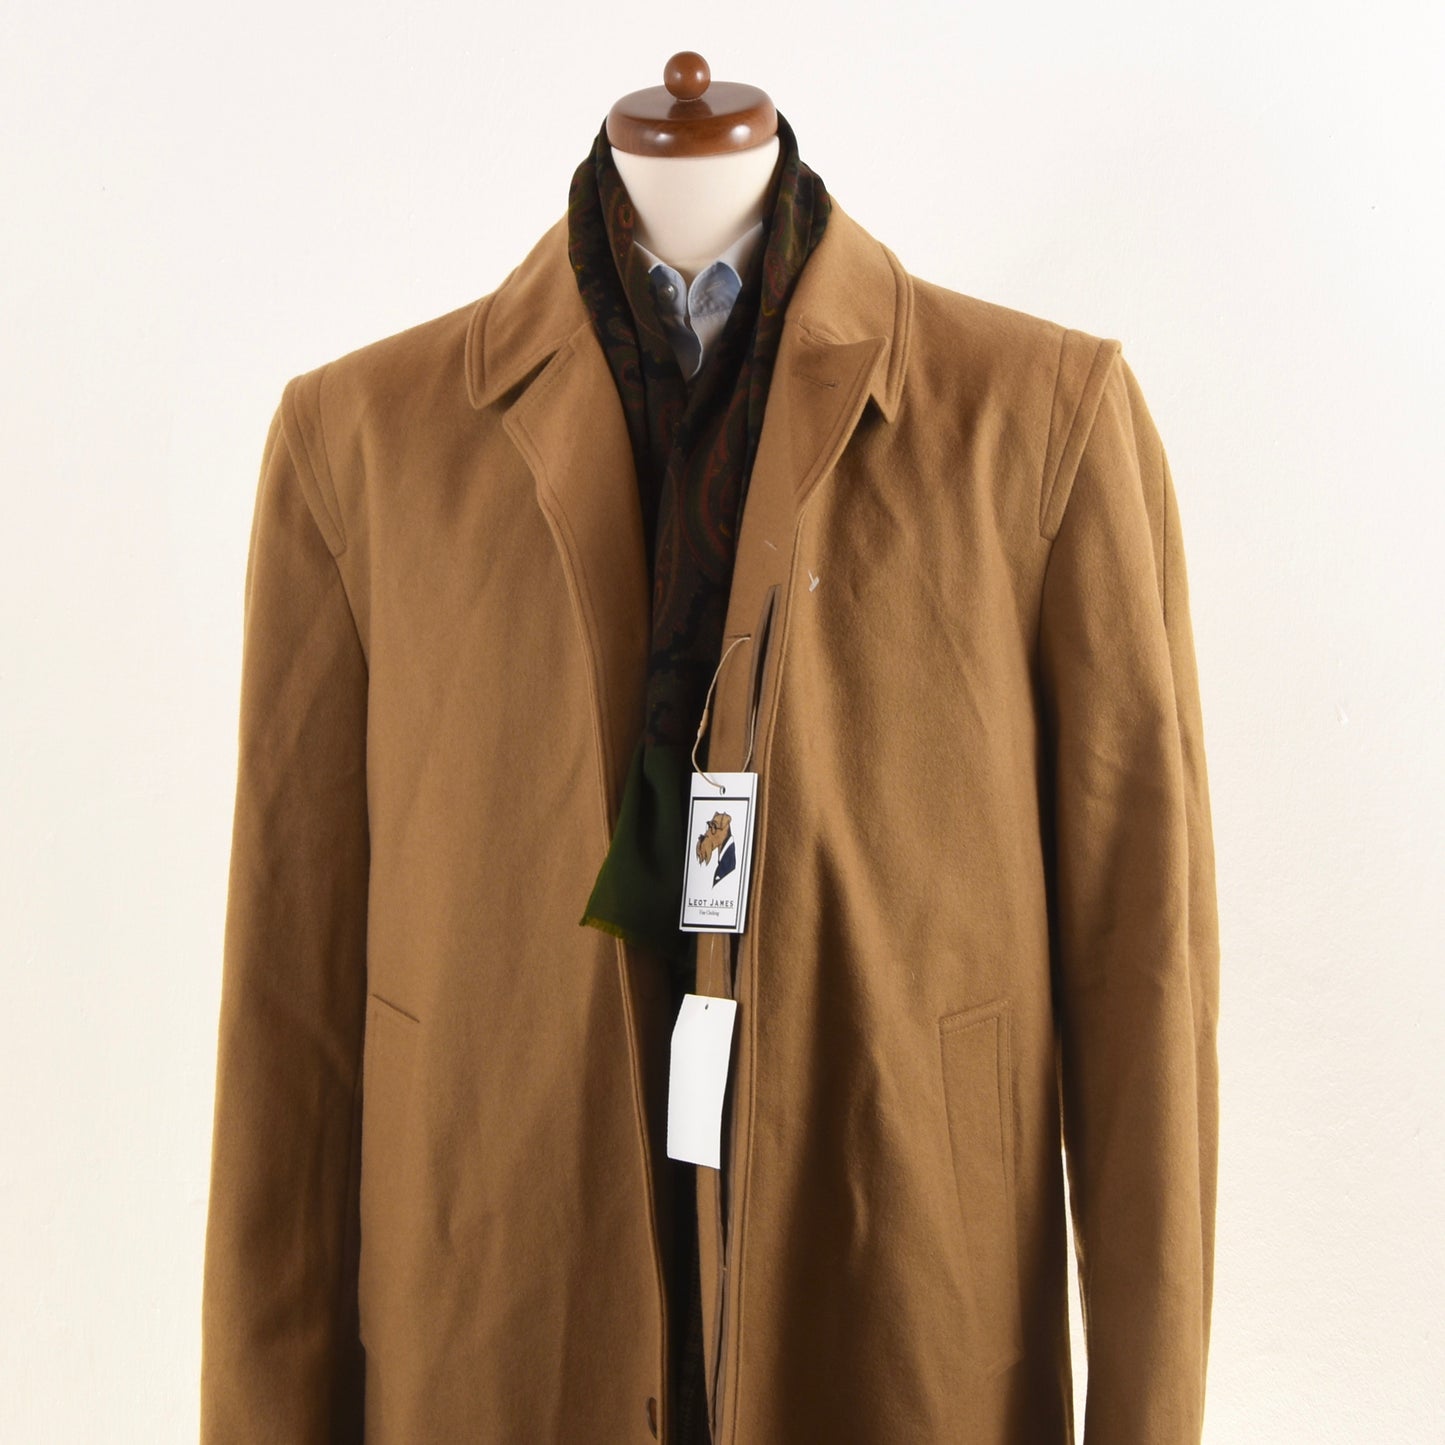 Orig. Dachstein Wool Overcoat Size 56 - Camel/Mustard